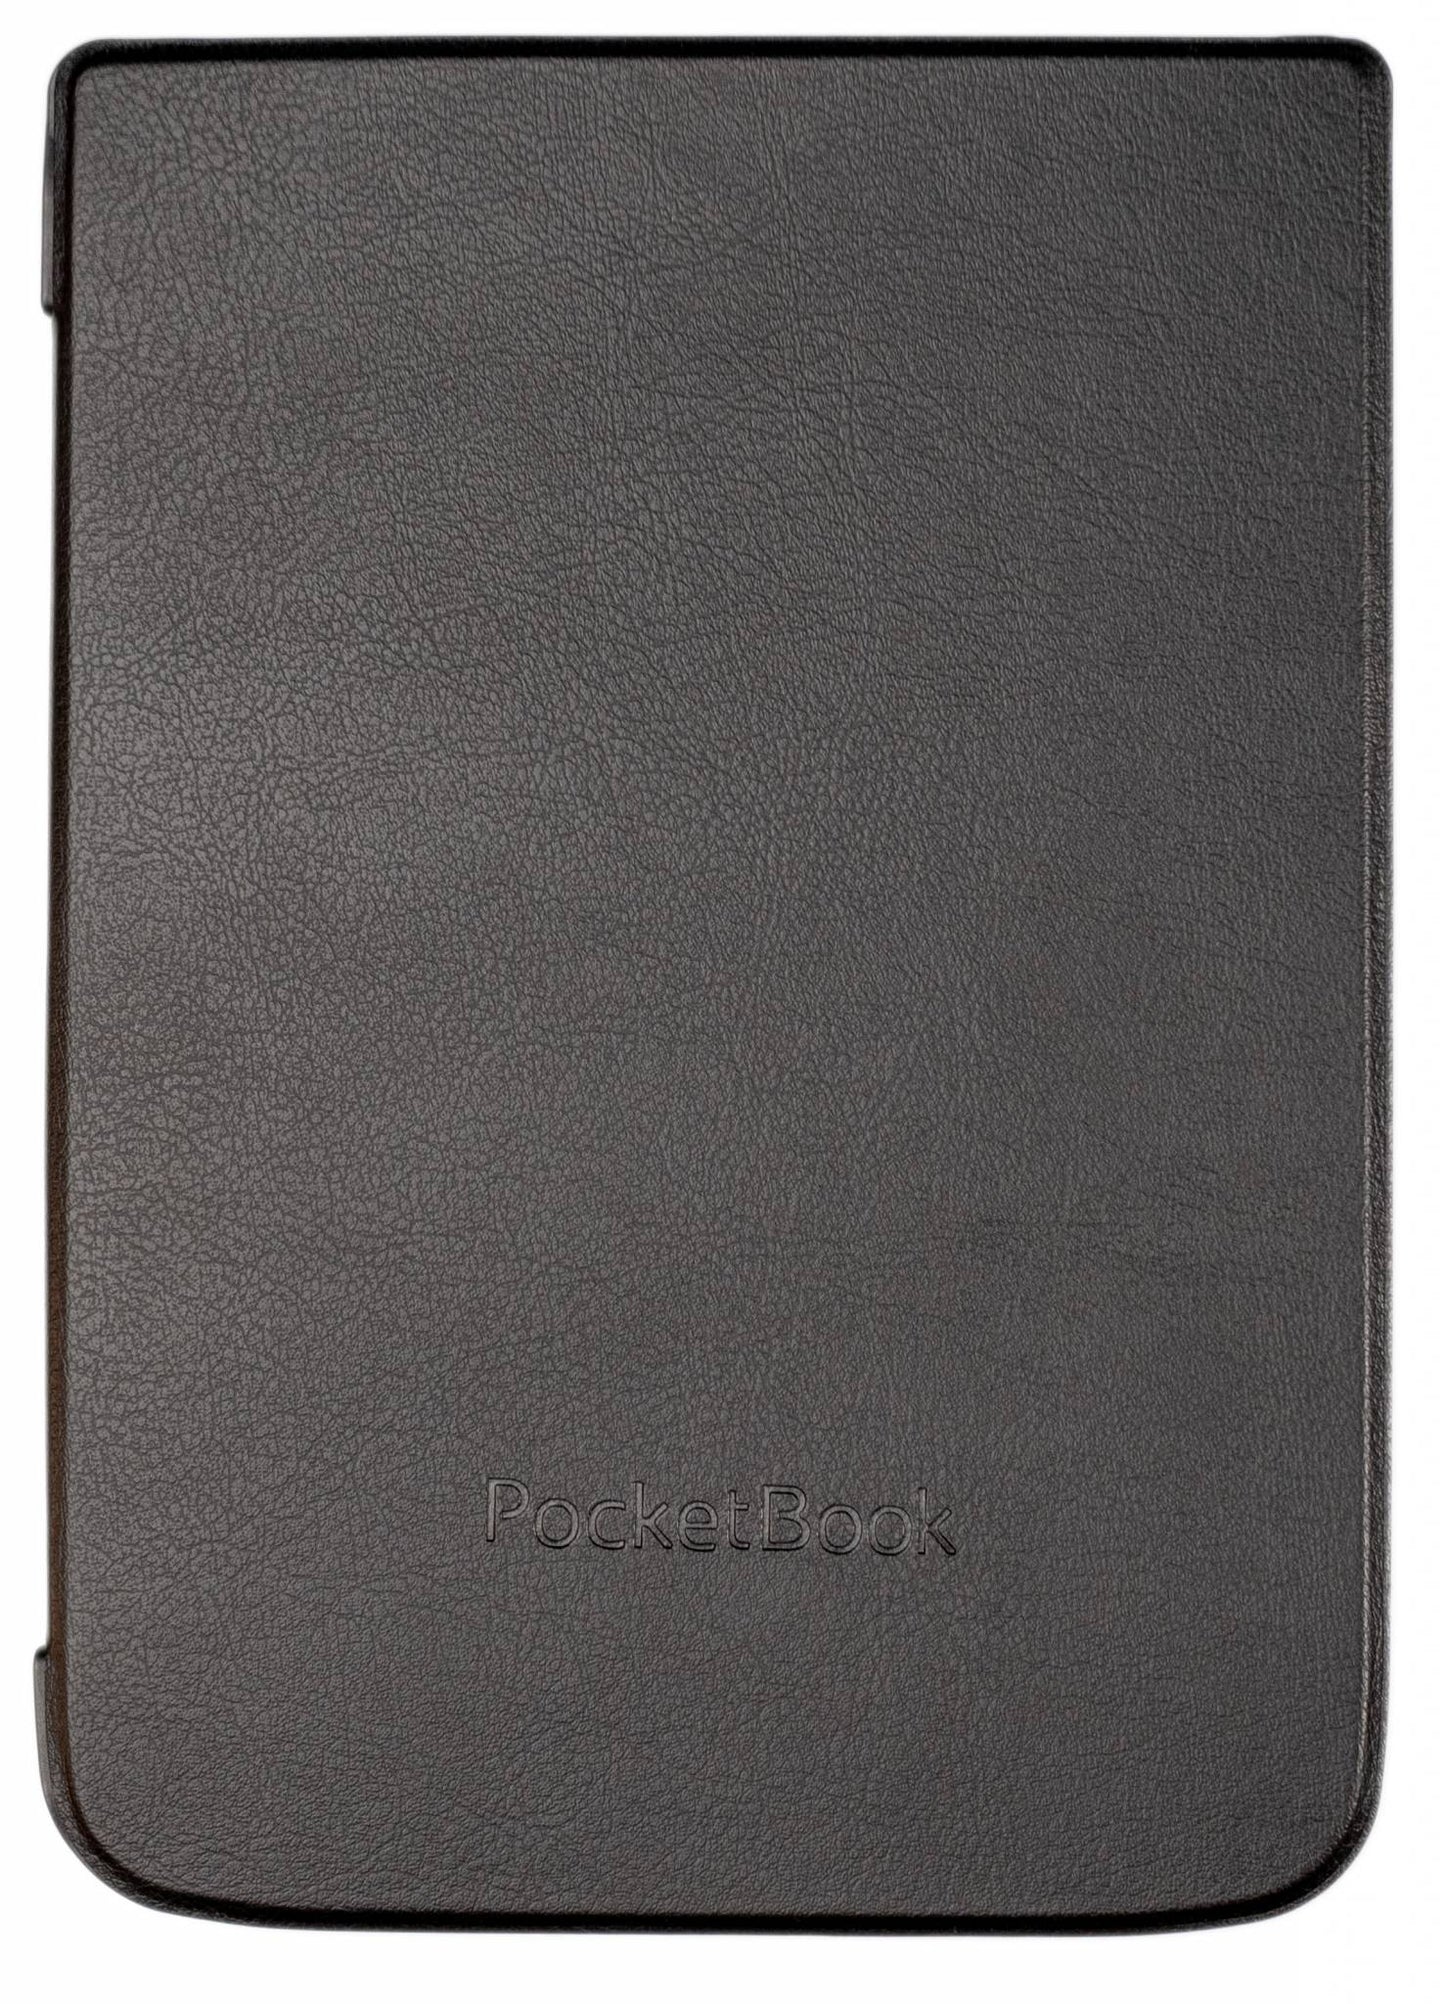 Pocketbook Inkpad 3 Leather Case - 5